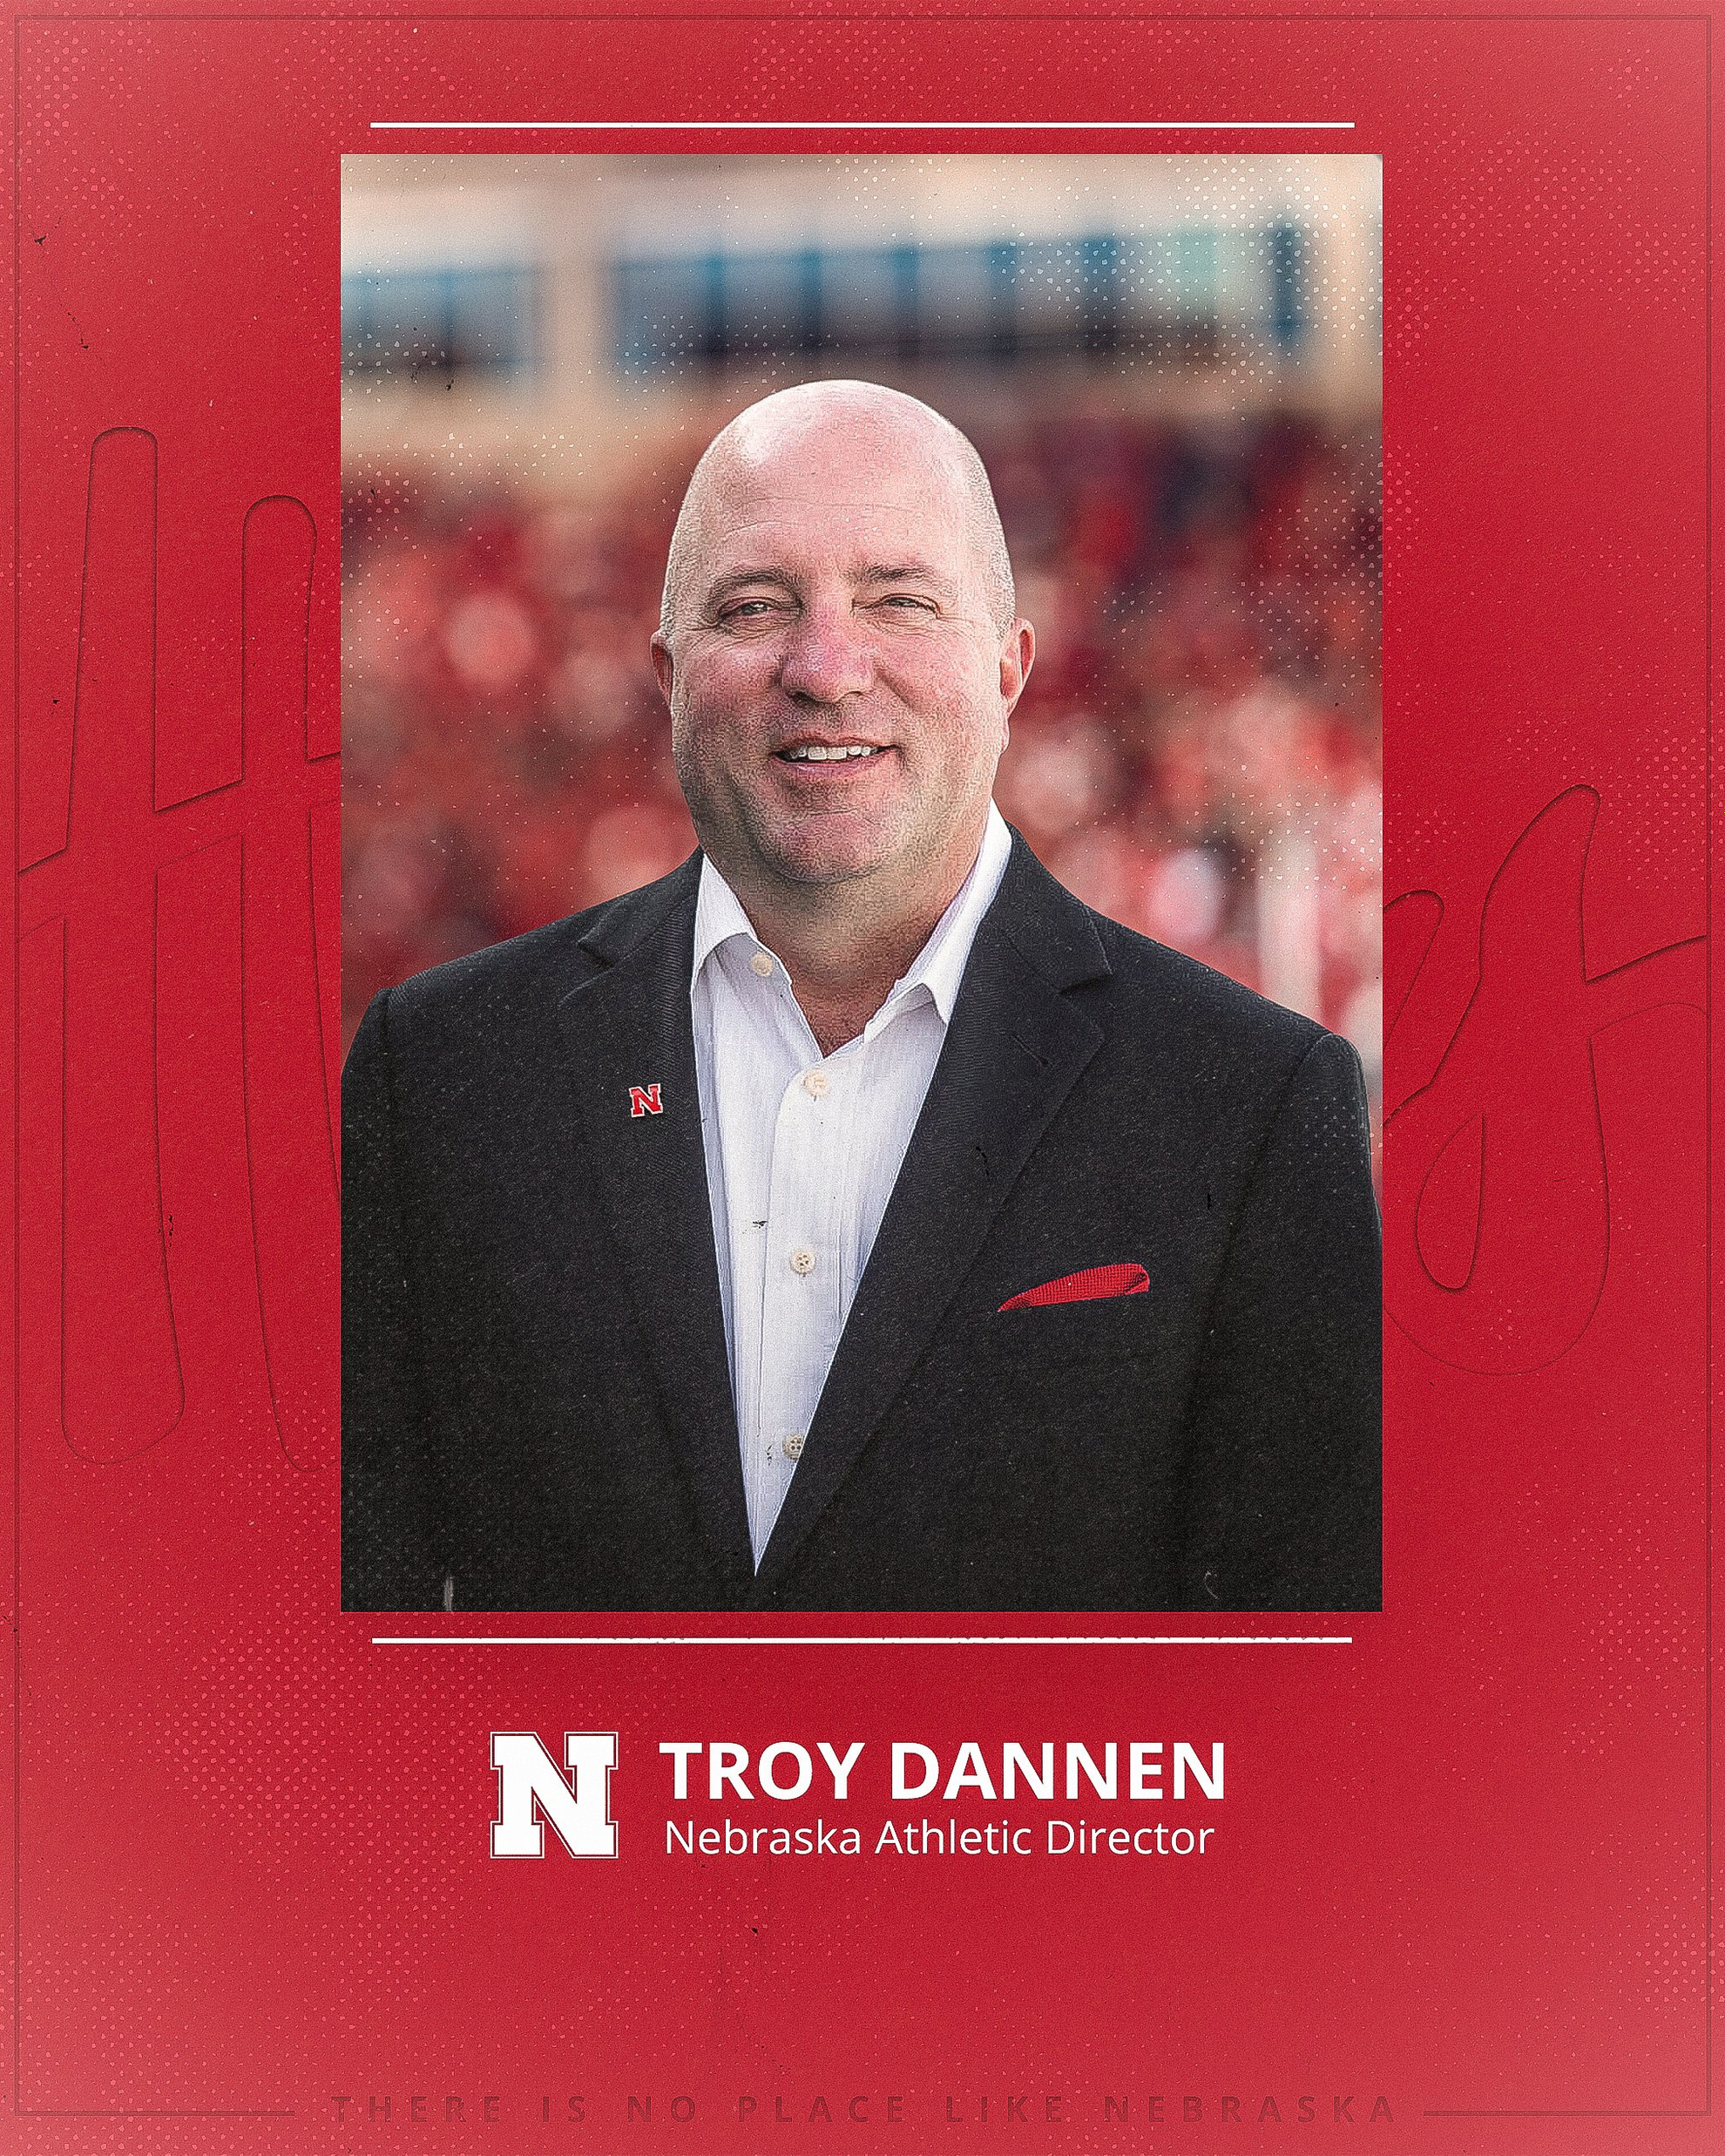 University of Nebraska names Troy Dannen as new athletic director